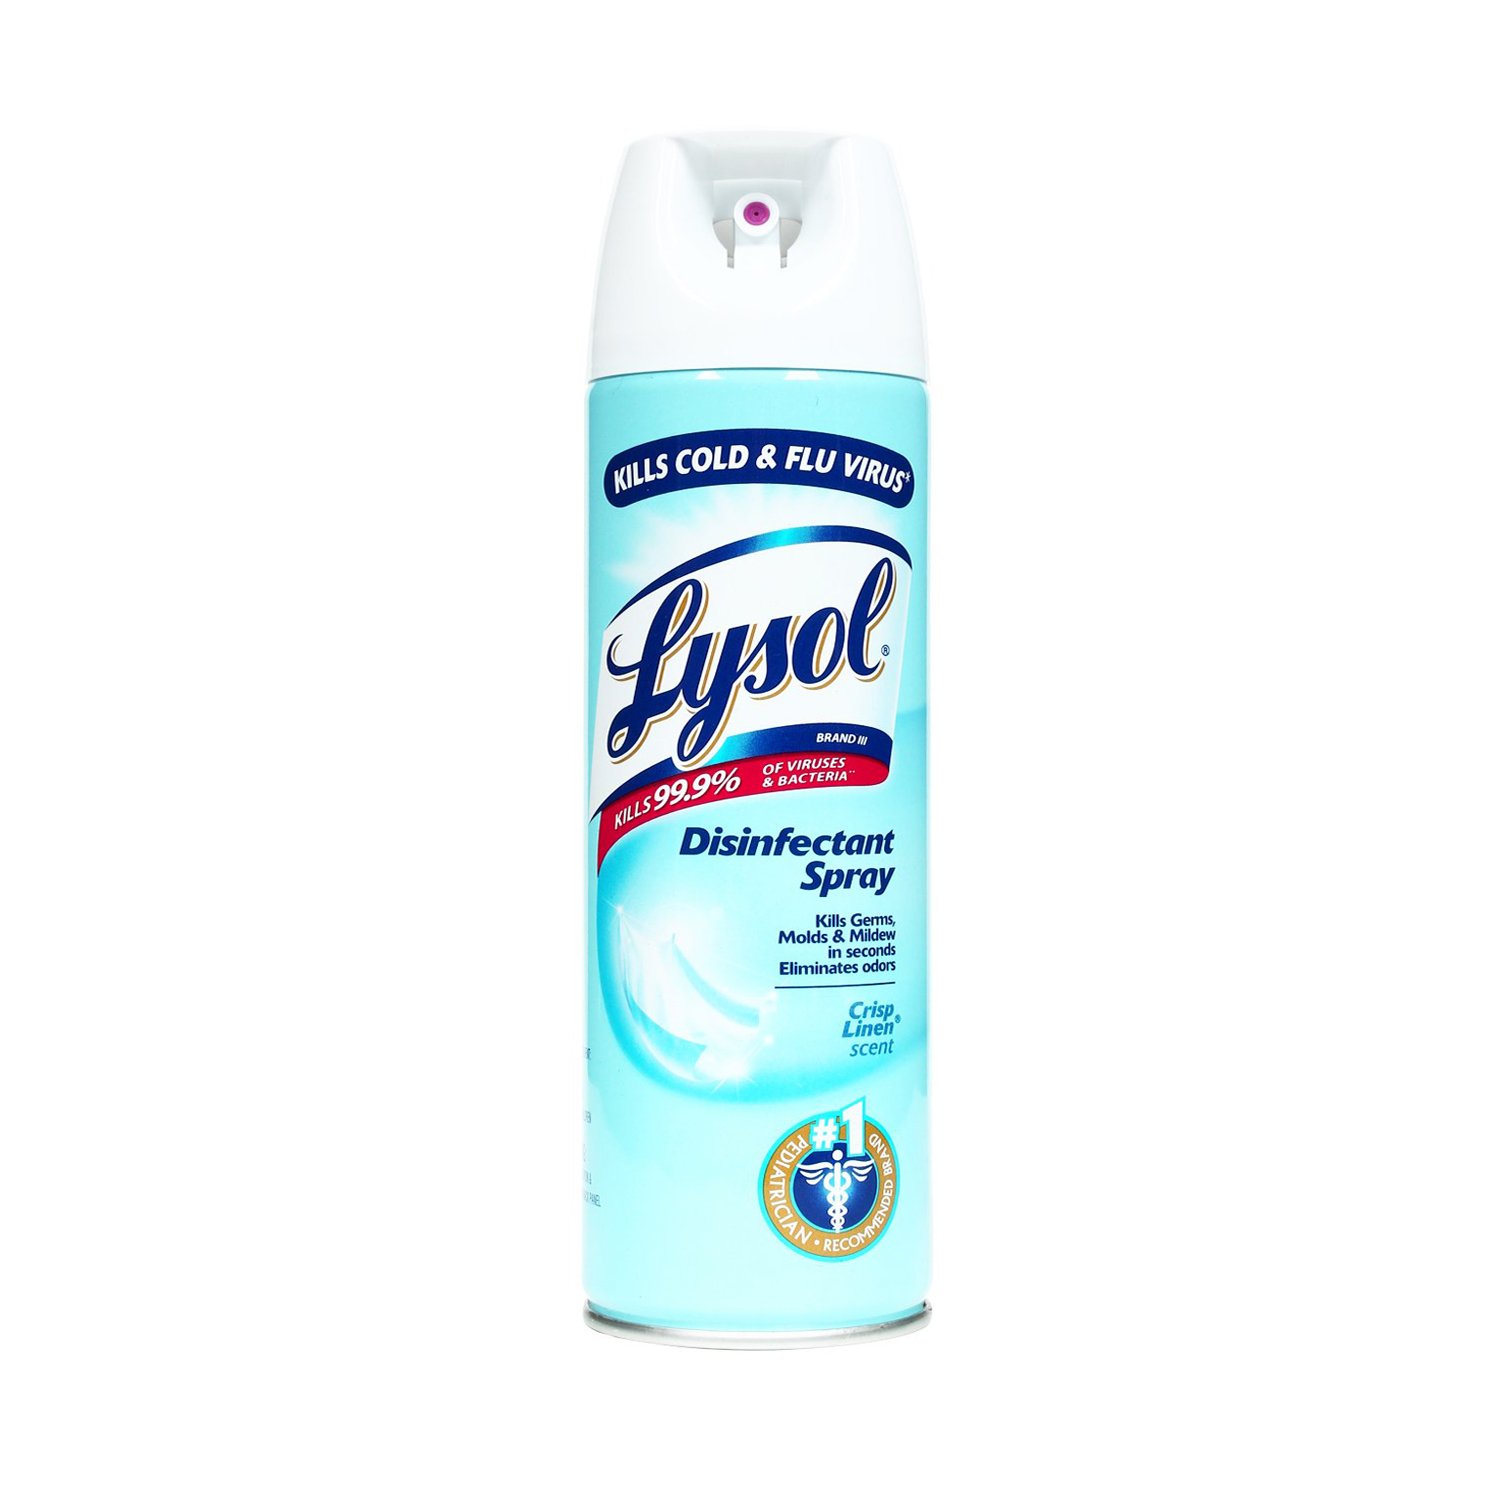 Lysol Disinfectant Spray 340g Price Philippines